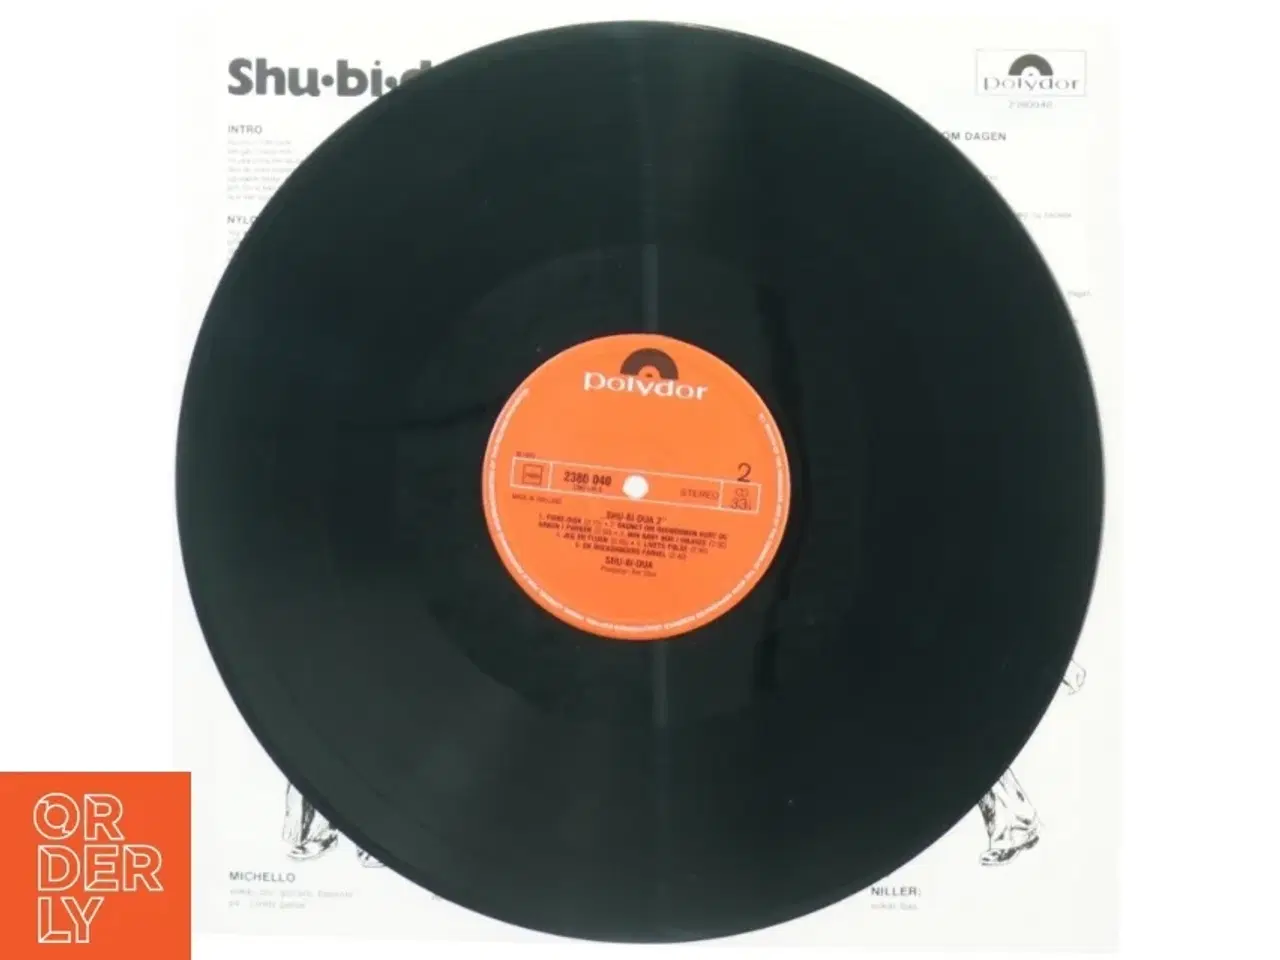 Billede 2 - Shubidua 2 fra Polydor (str. 30 cm)